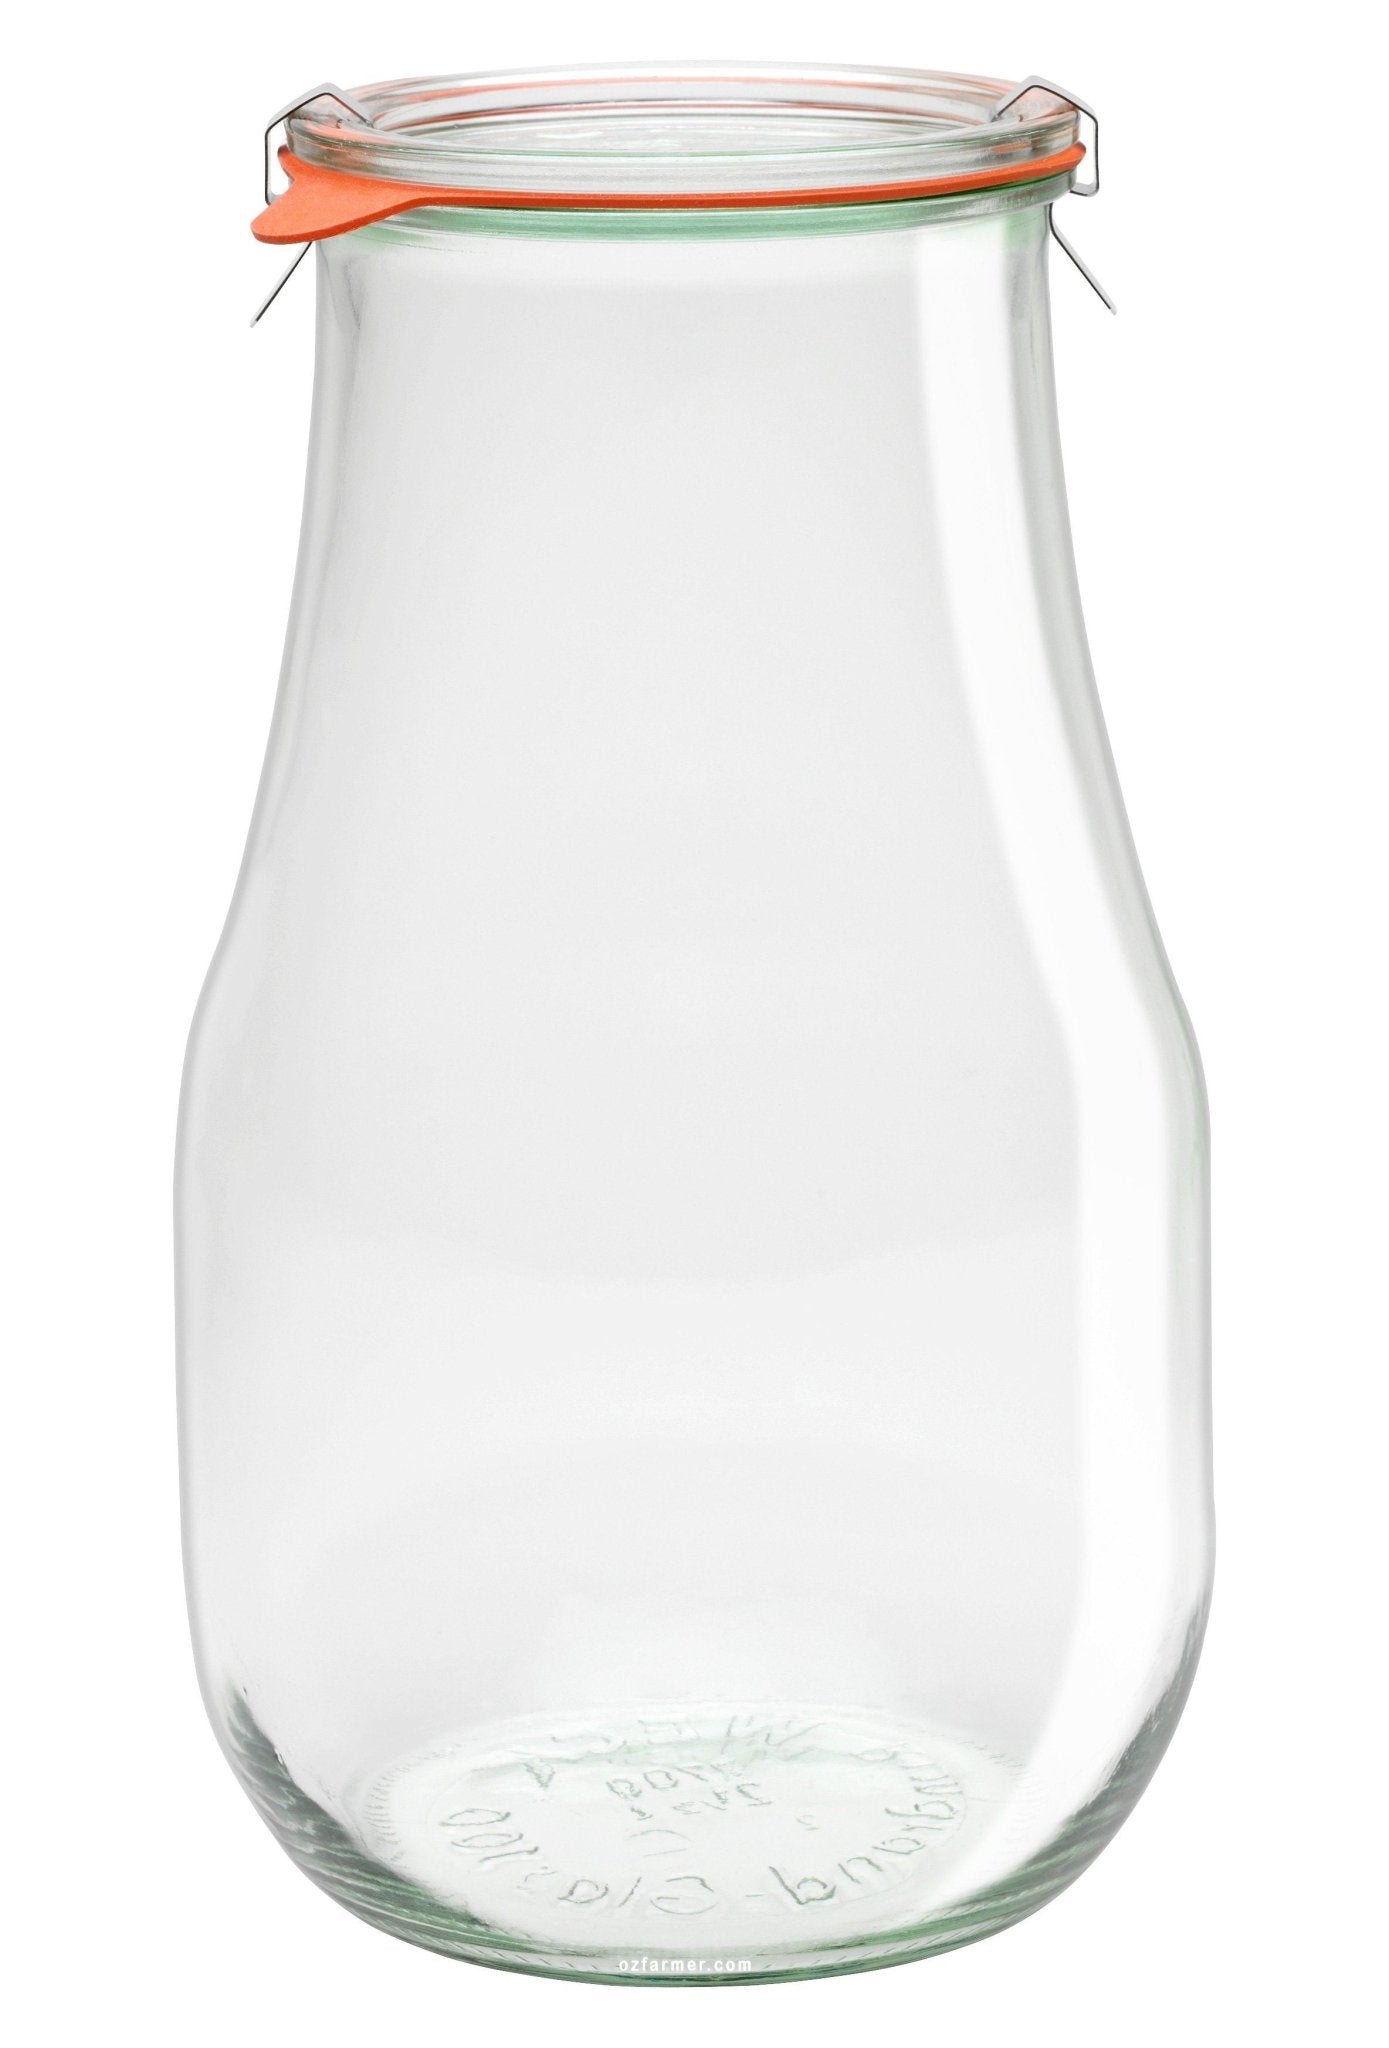 2.5 litre Tulip Jar Complete - 739 Weck - Ball Mason Australia